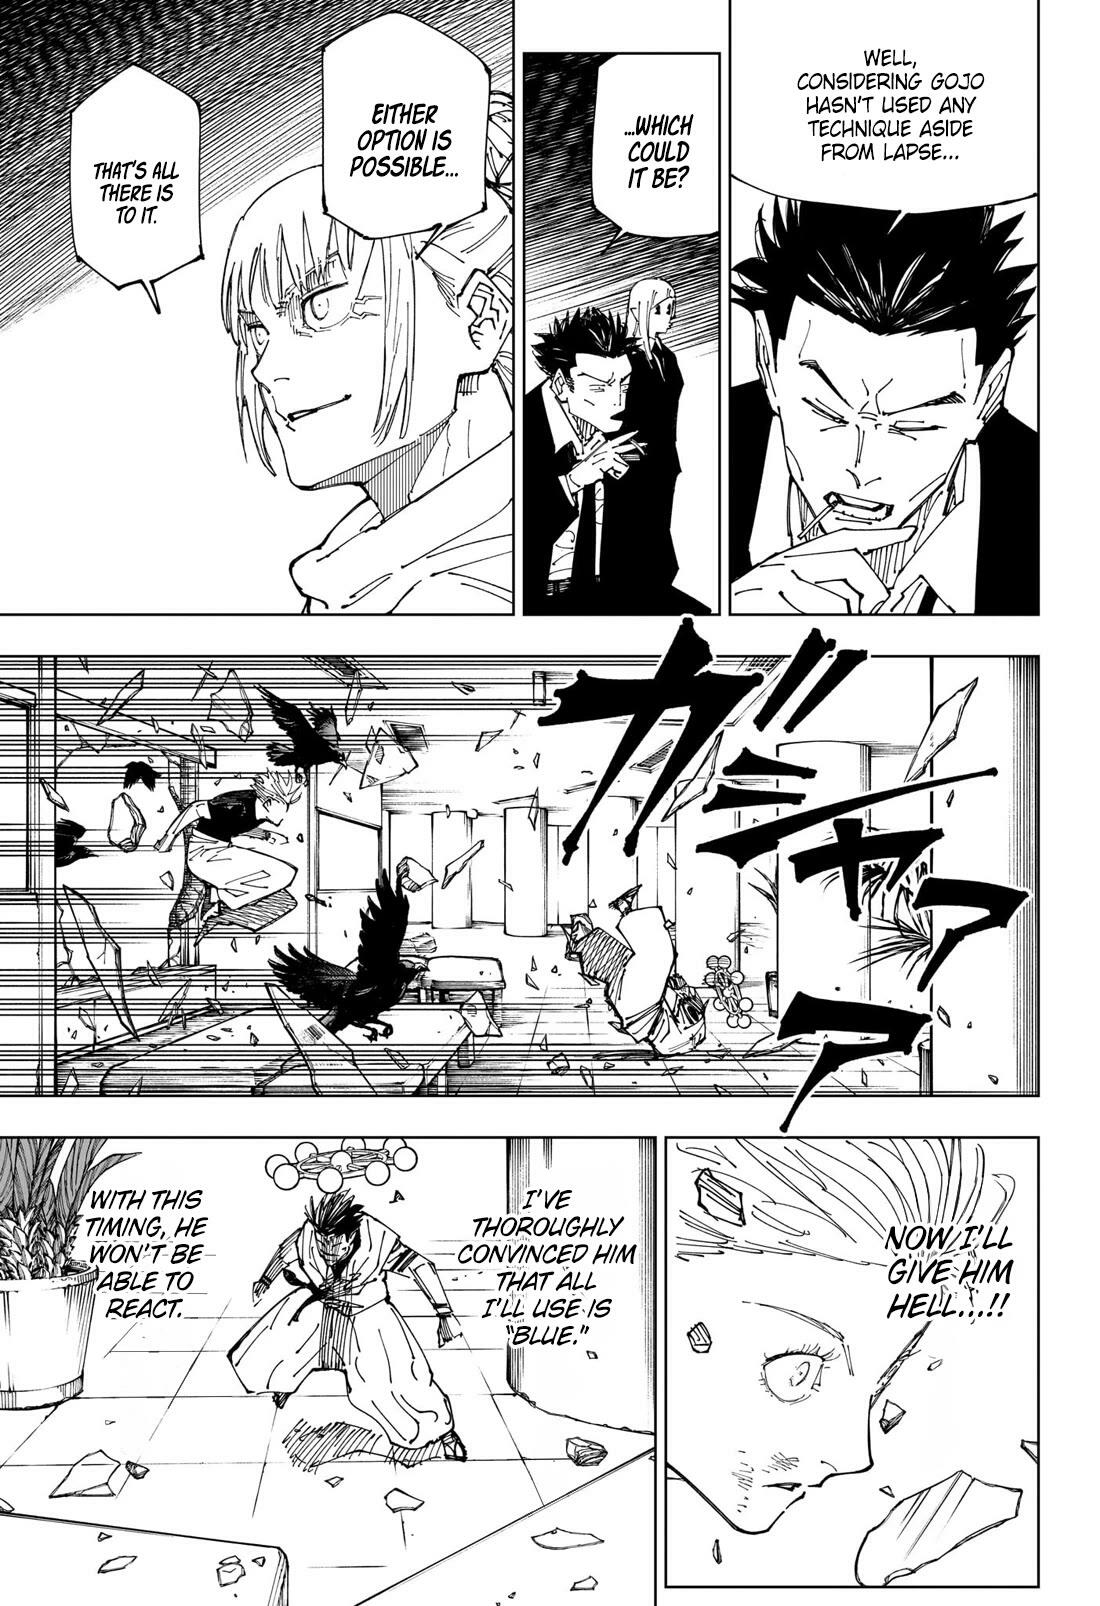 Jujutsu Kaisen Chapter 232: The Decisive Battle In The Uninhabited, Demon-Infested Shinjuku ⑩ page 8 - Mangakakalot